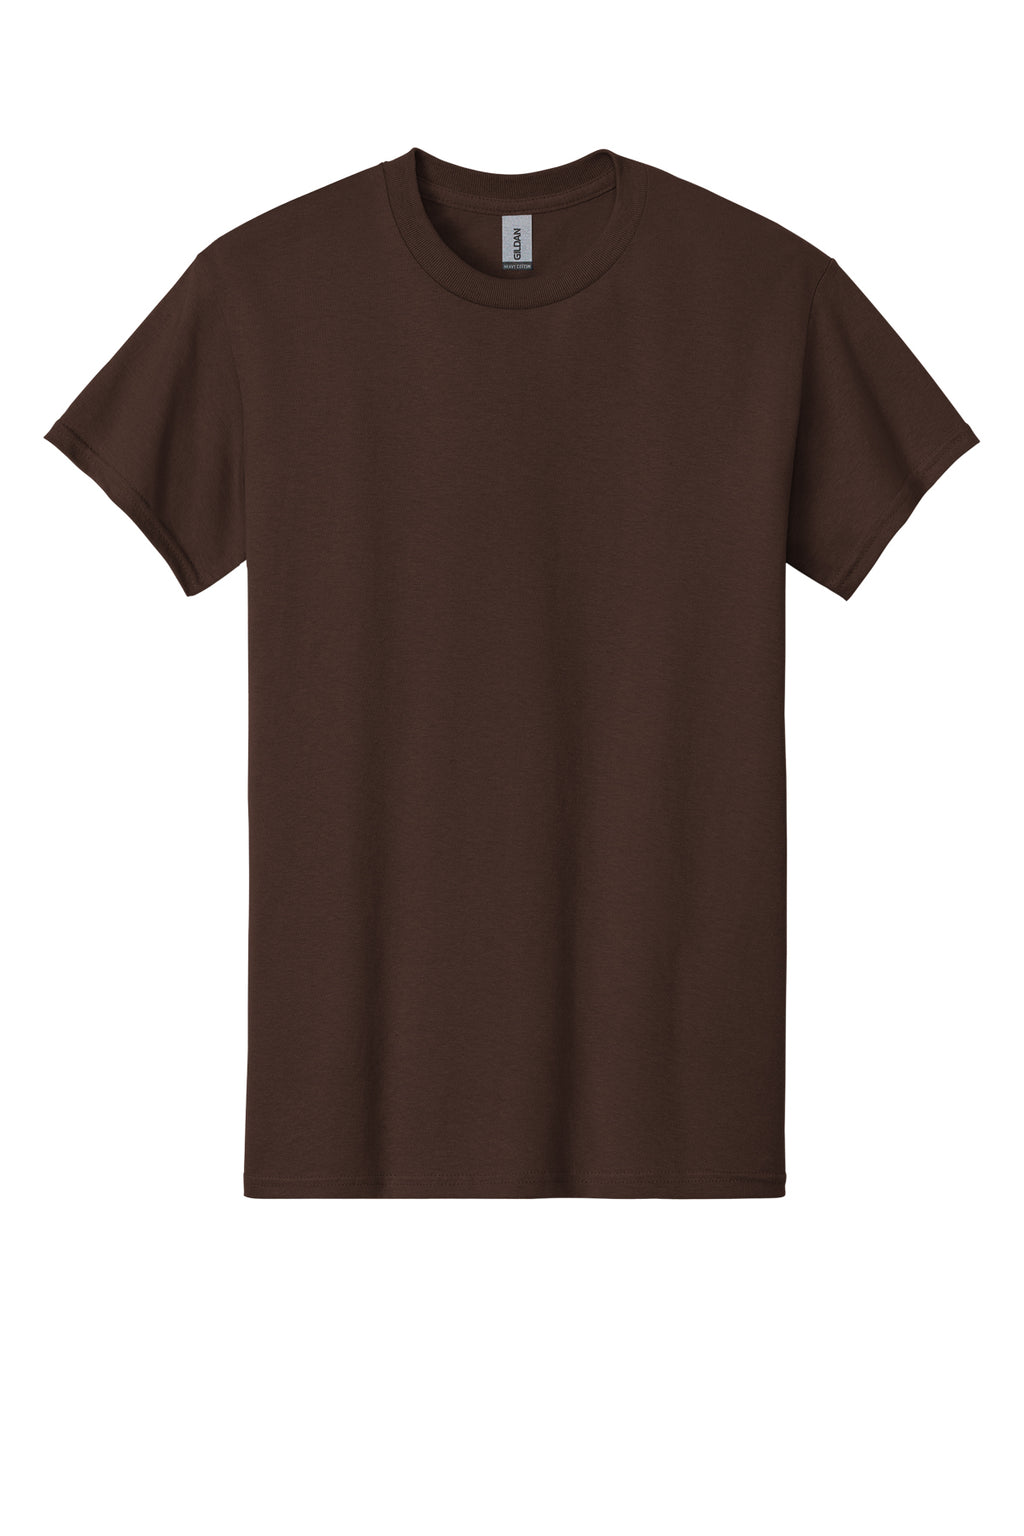 Gildan Mens/Unisex S/S Shirts Dark Chocolate